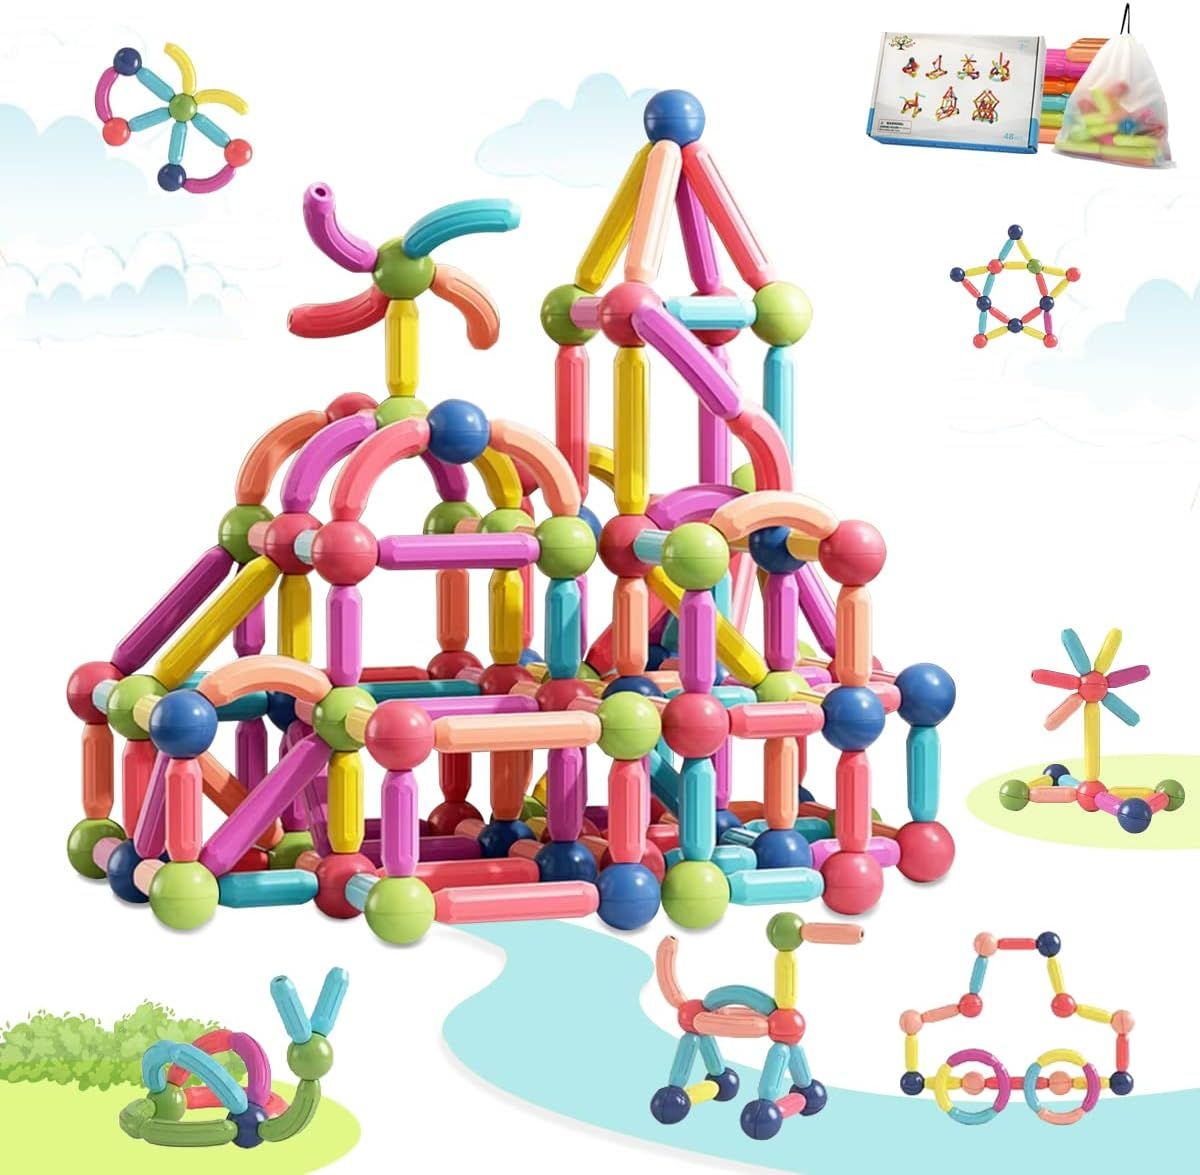 Boys Girls Toys Age 4-5,Little Boy Girl Toys Magnetic Blocks Sticks Tiles Construction Building, ... | Amazon (US)